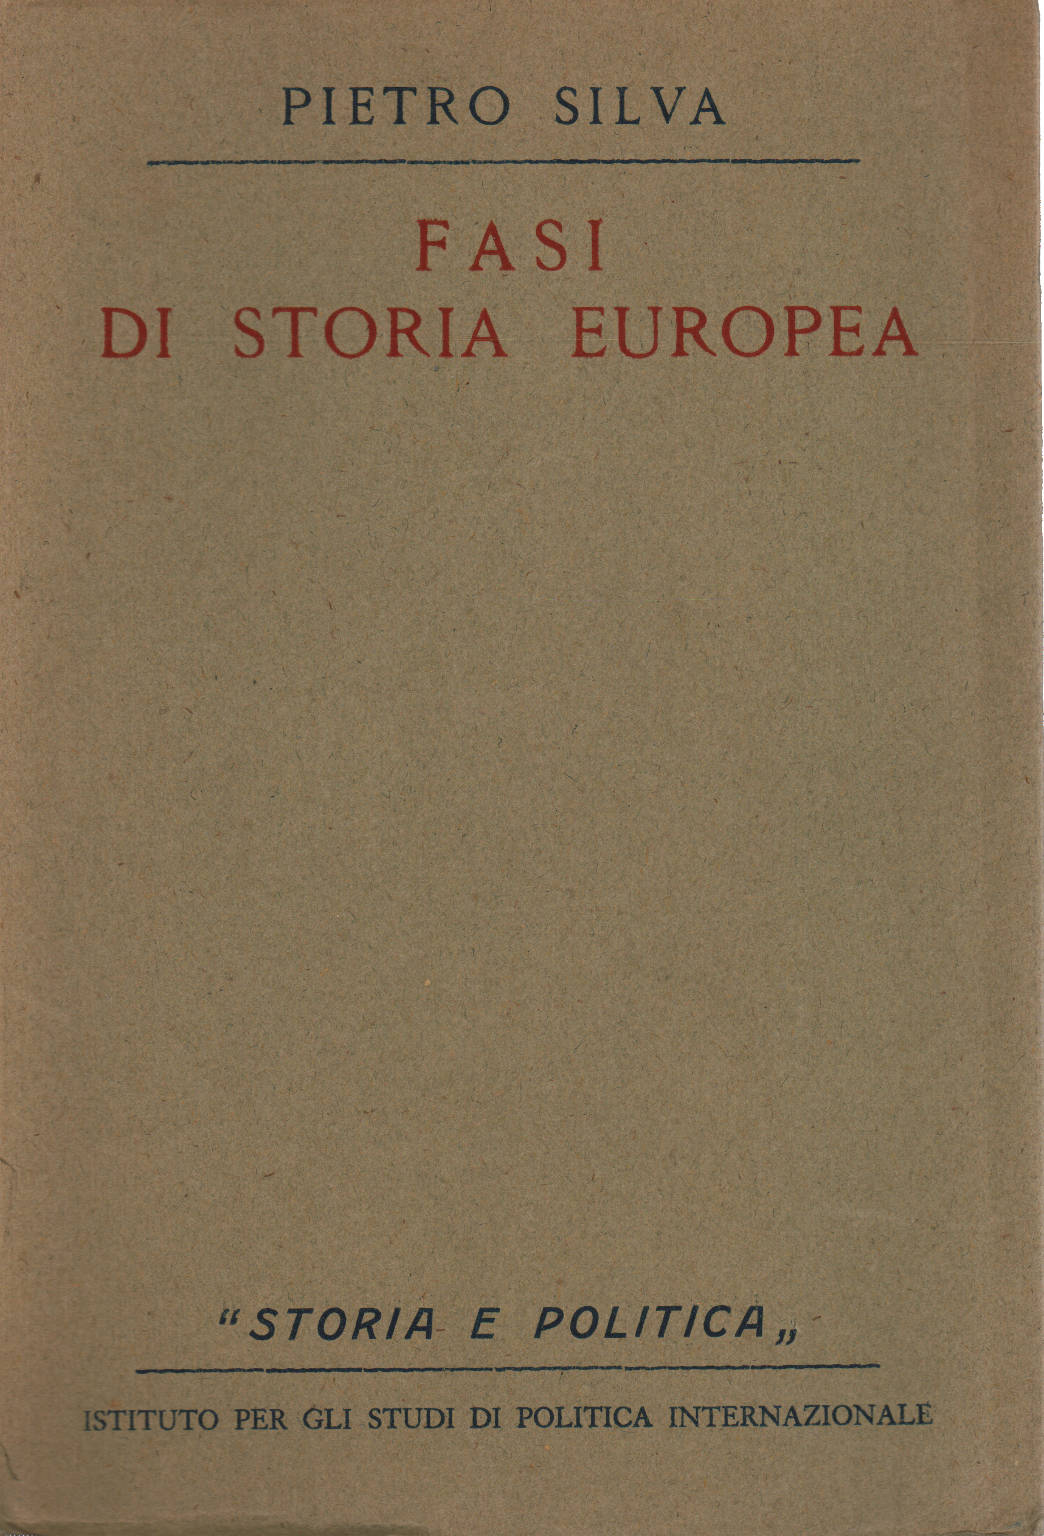 Phases of European history, Pietro Silva